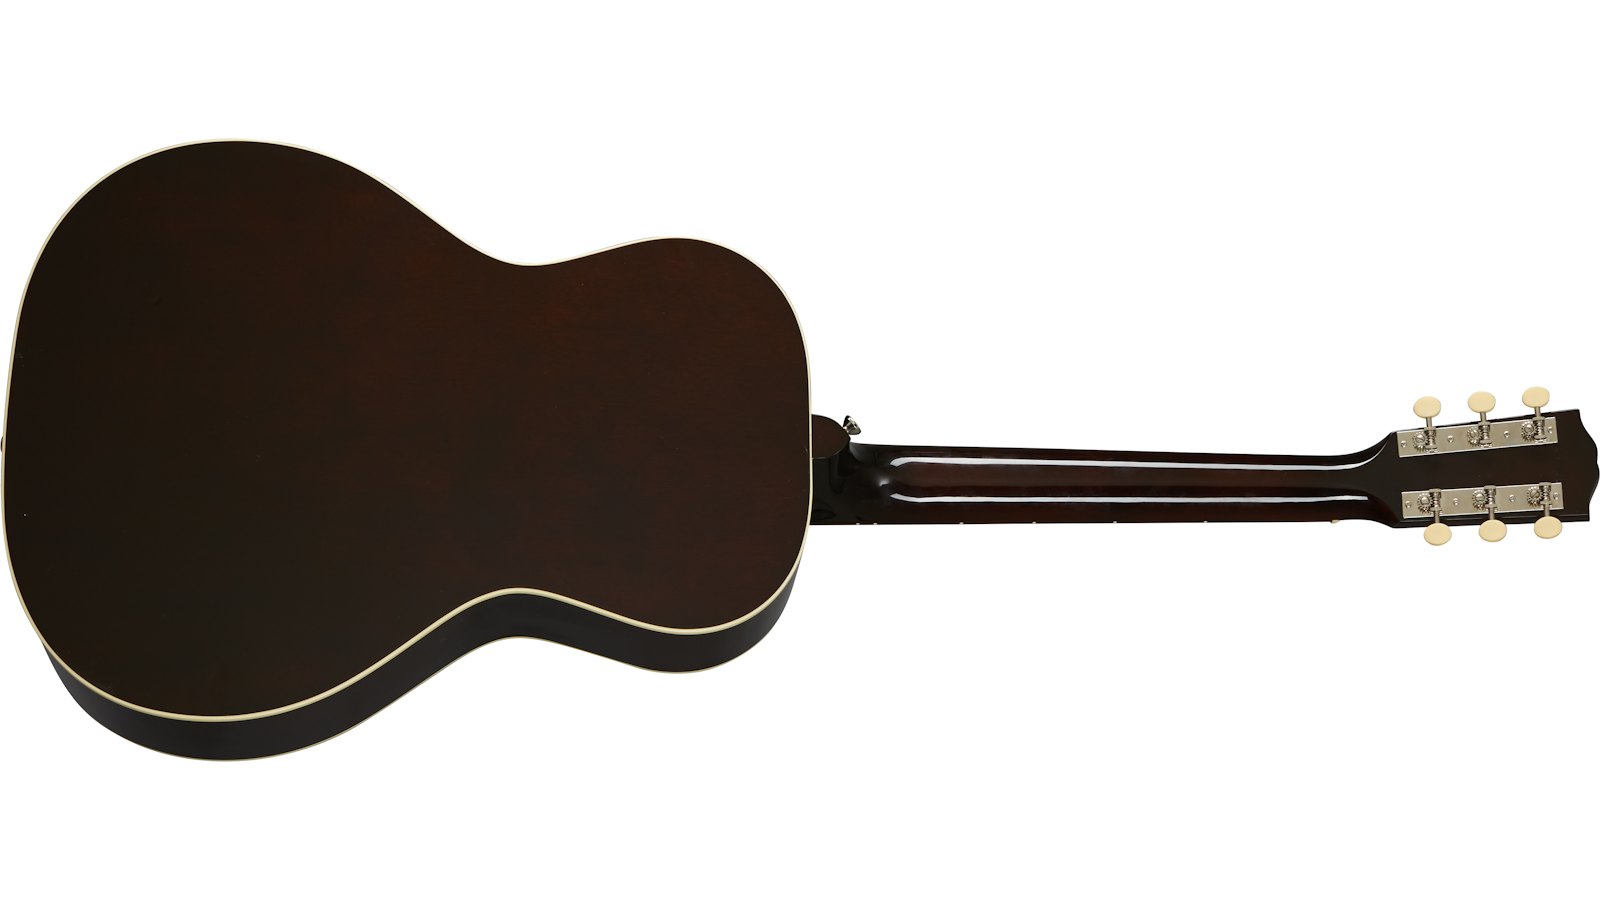 Gibson L-00 Original 2020 Parlor Epicea Acajou Rw - Vintage Sunburst - Elektroakustische Gitarre - Variation 1